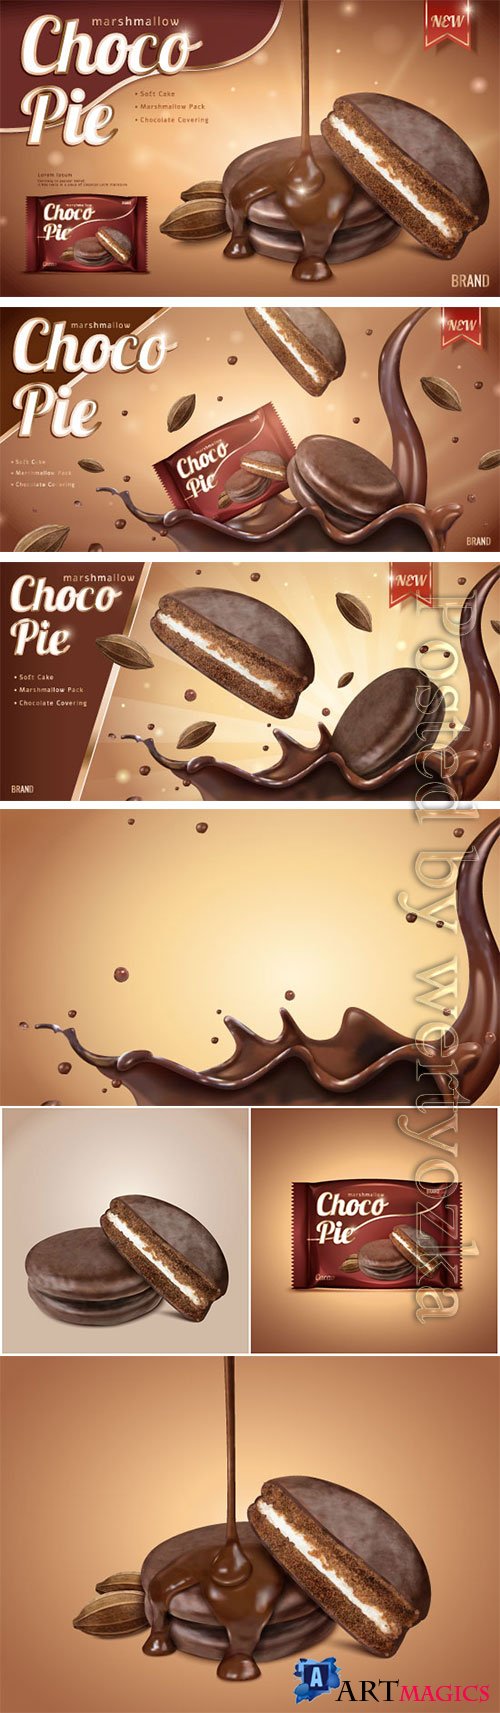 Choco pie ads with splashing syrup